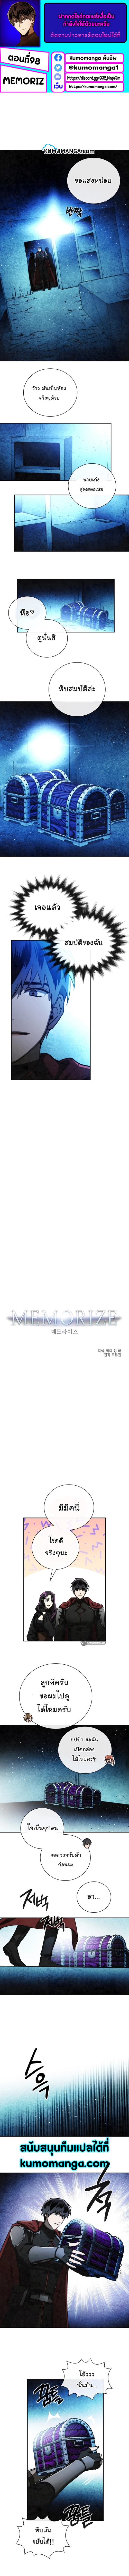 MEMORIZE 1